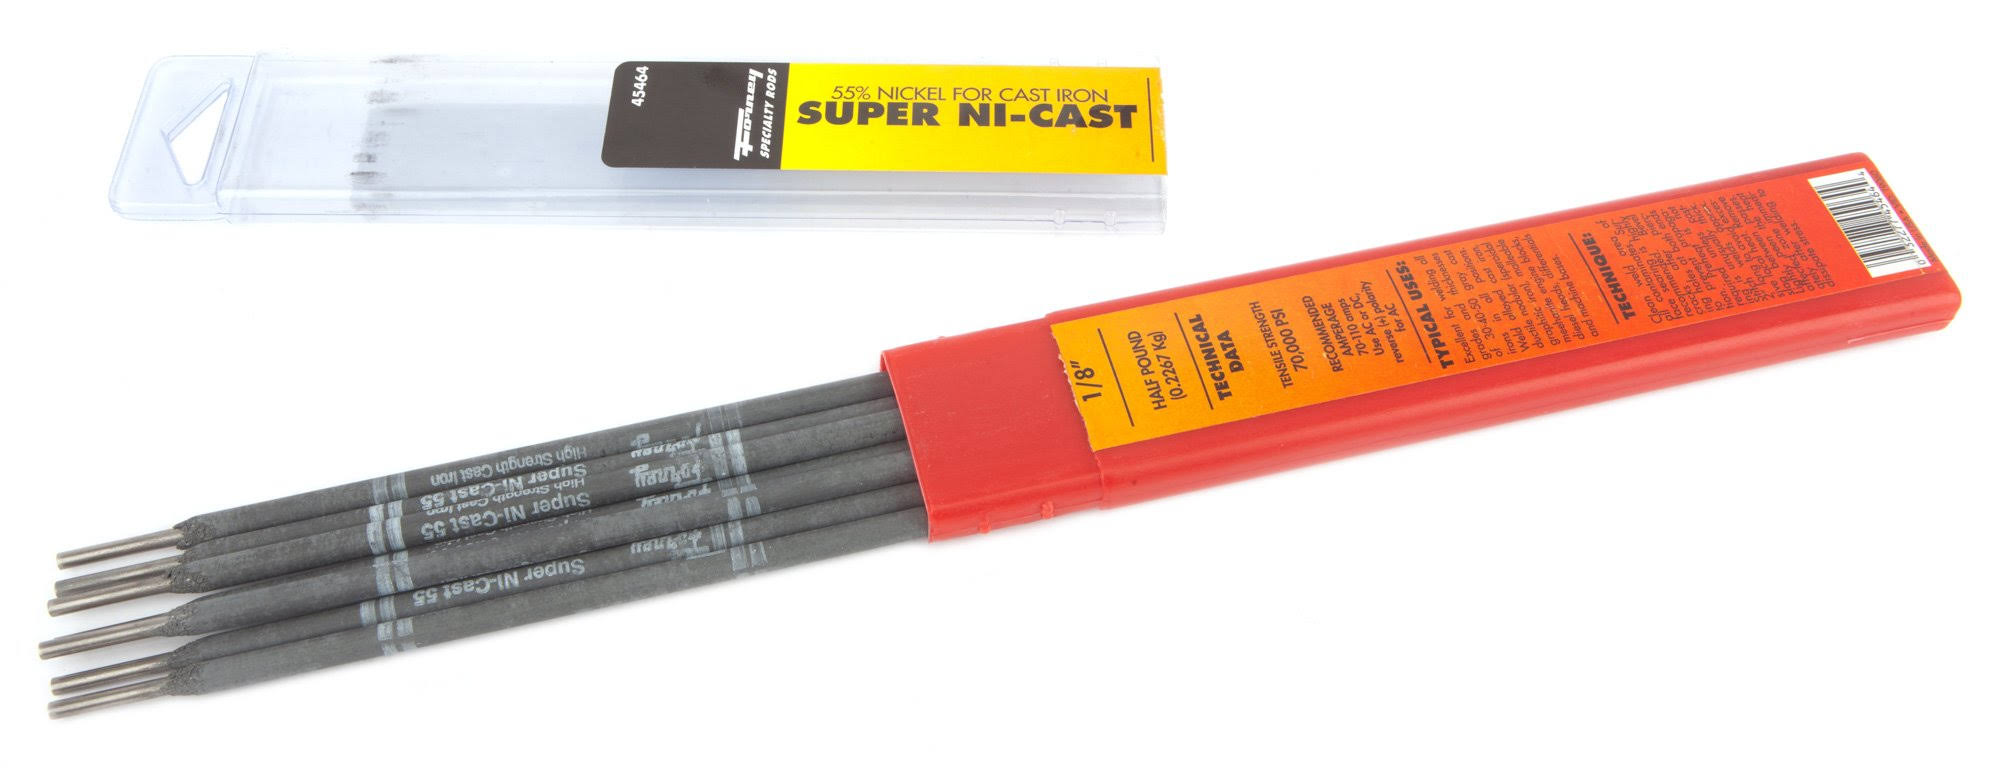 Forney 45464 Super 55-Percent Nickel Cast Specialty Rod - 1/8", 1/2lb